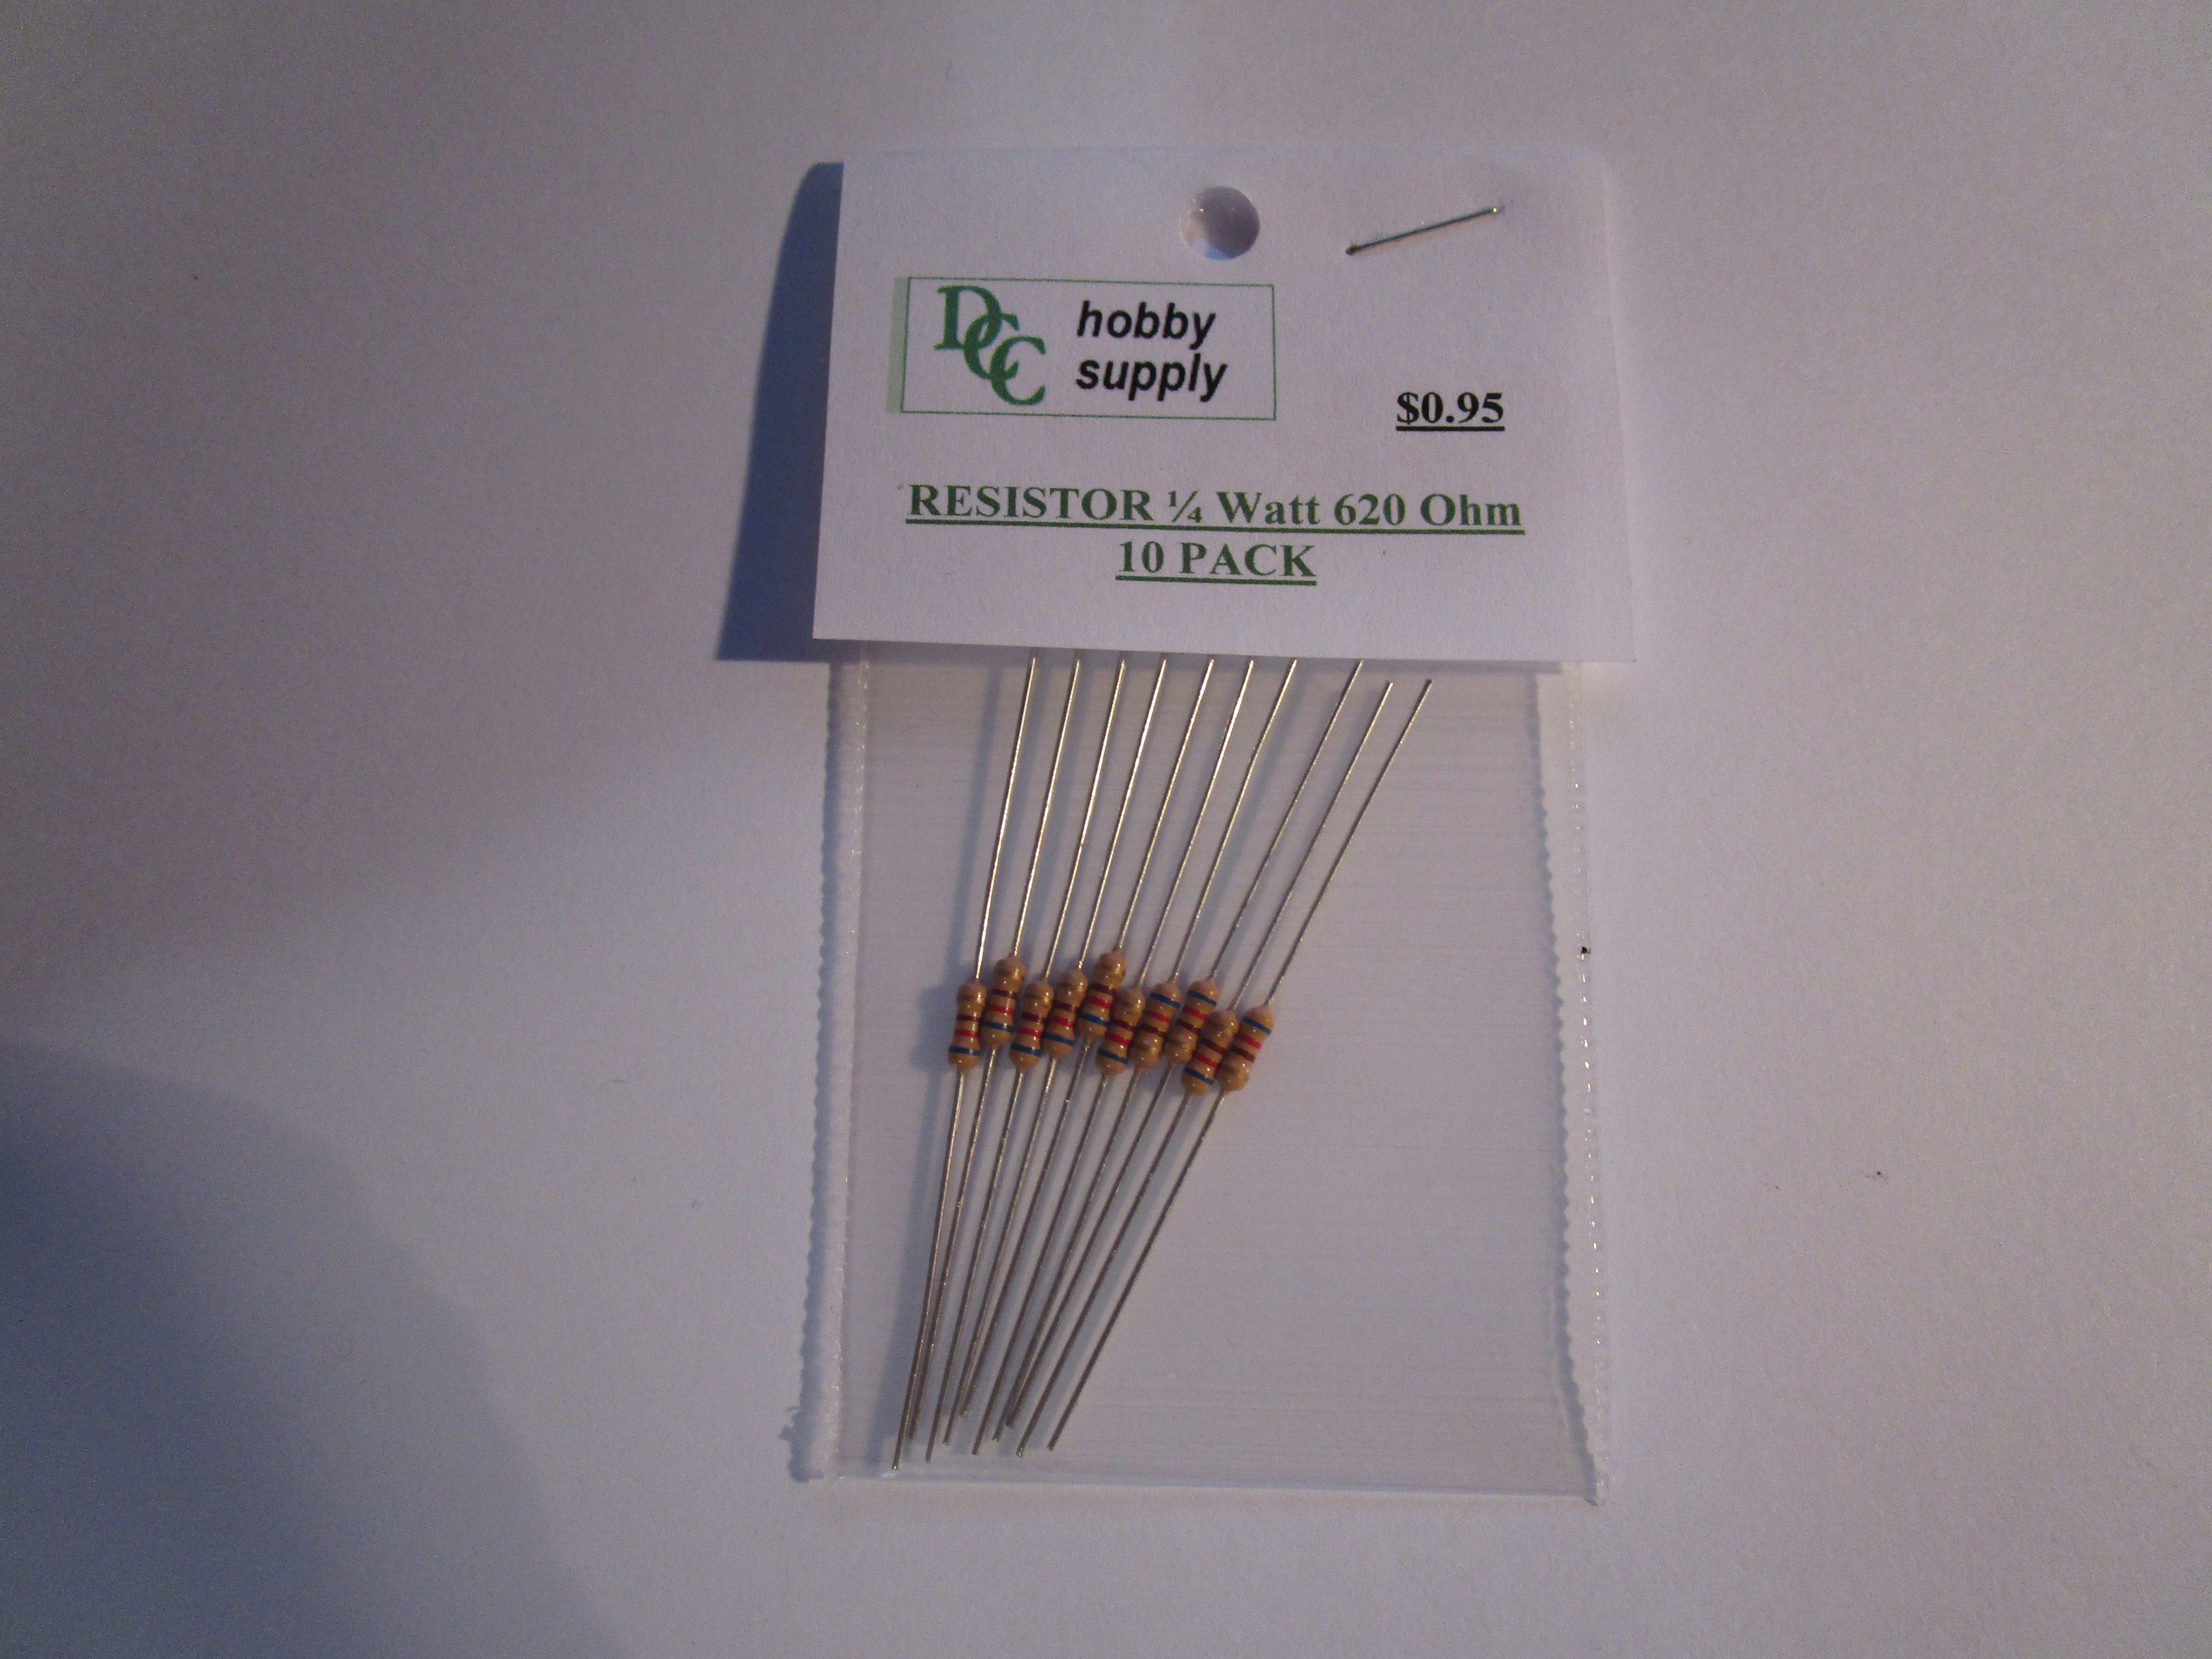 Resistor, 1/4 watt 620 Ohm (10 pack)